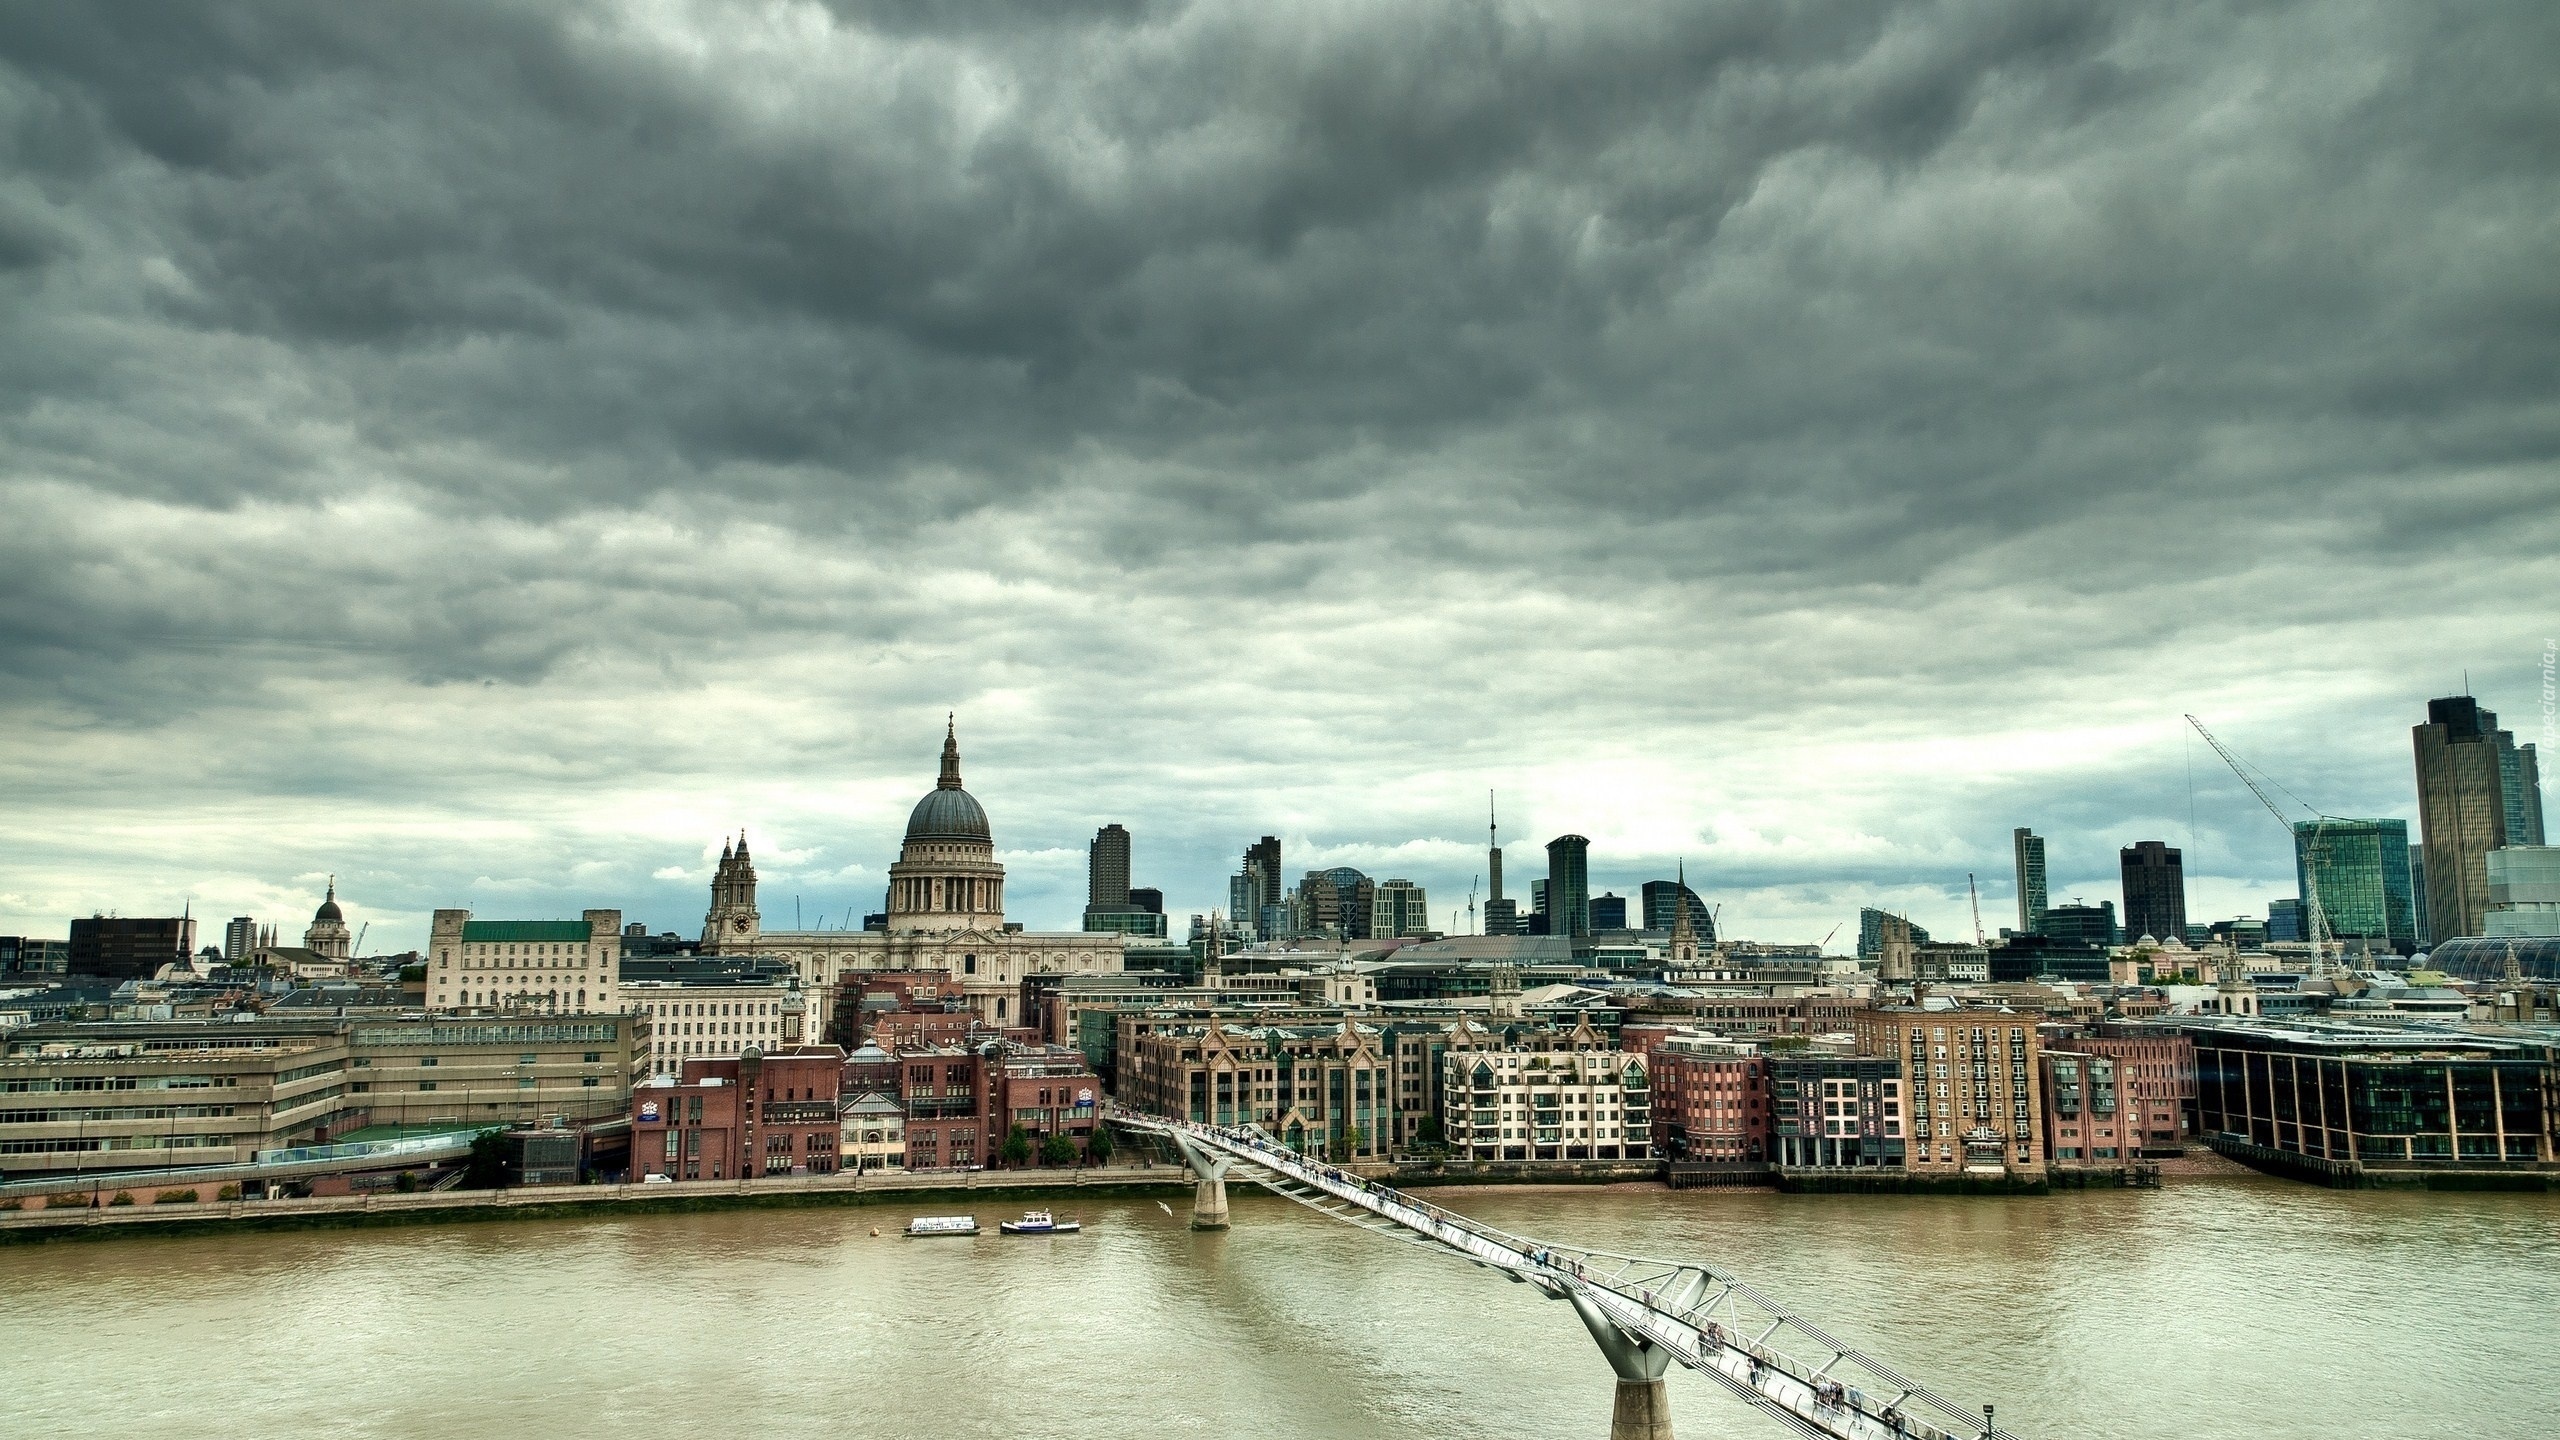 Londyn, Rzeka, Most, Millenium